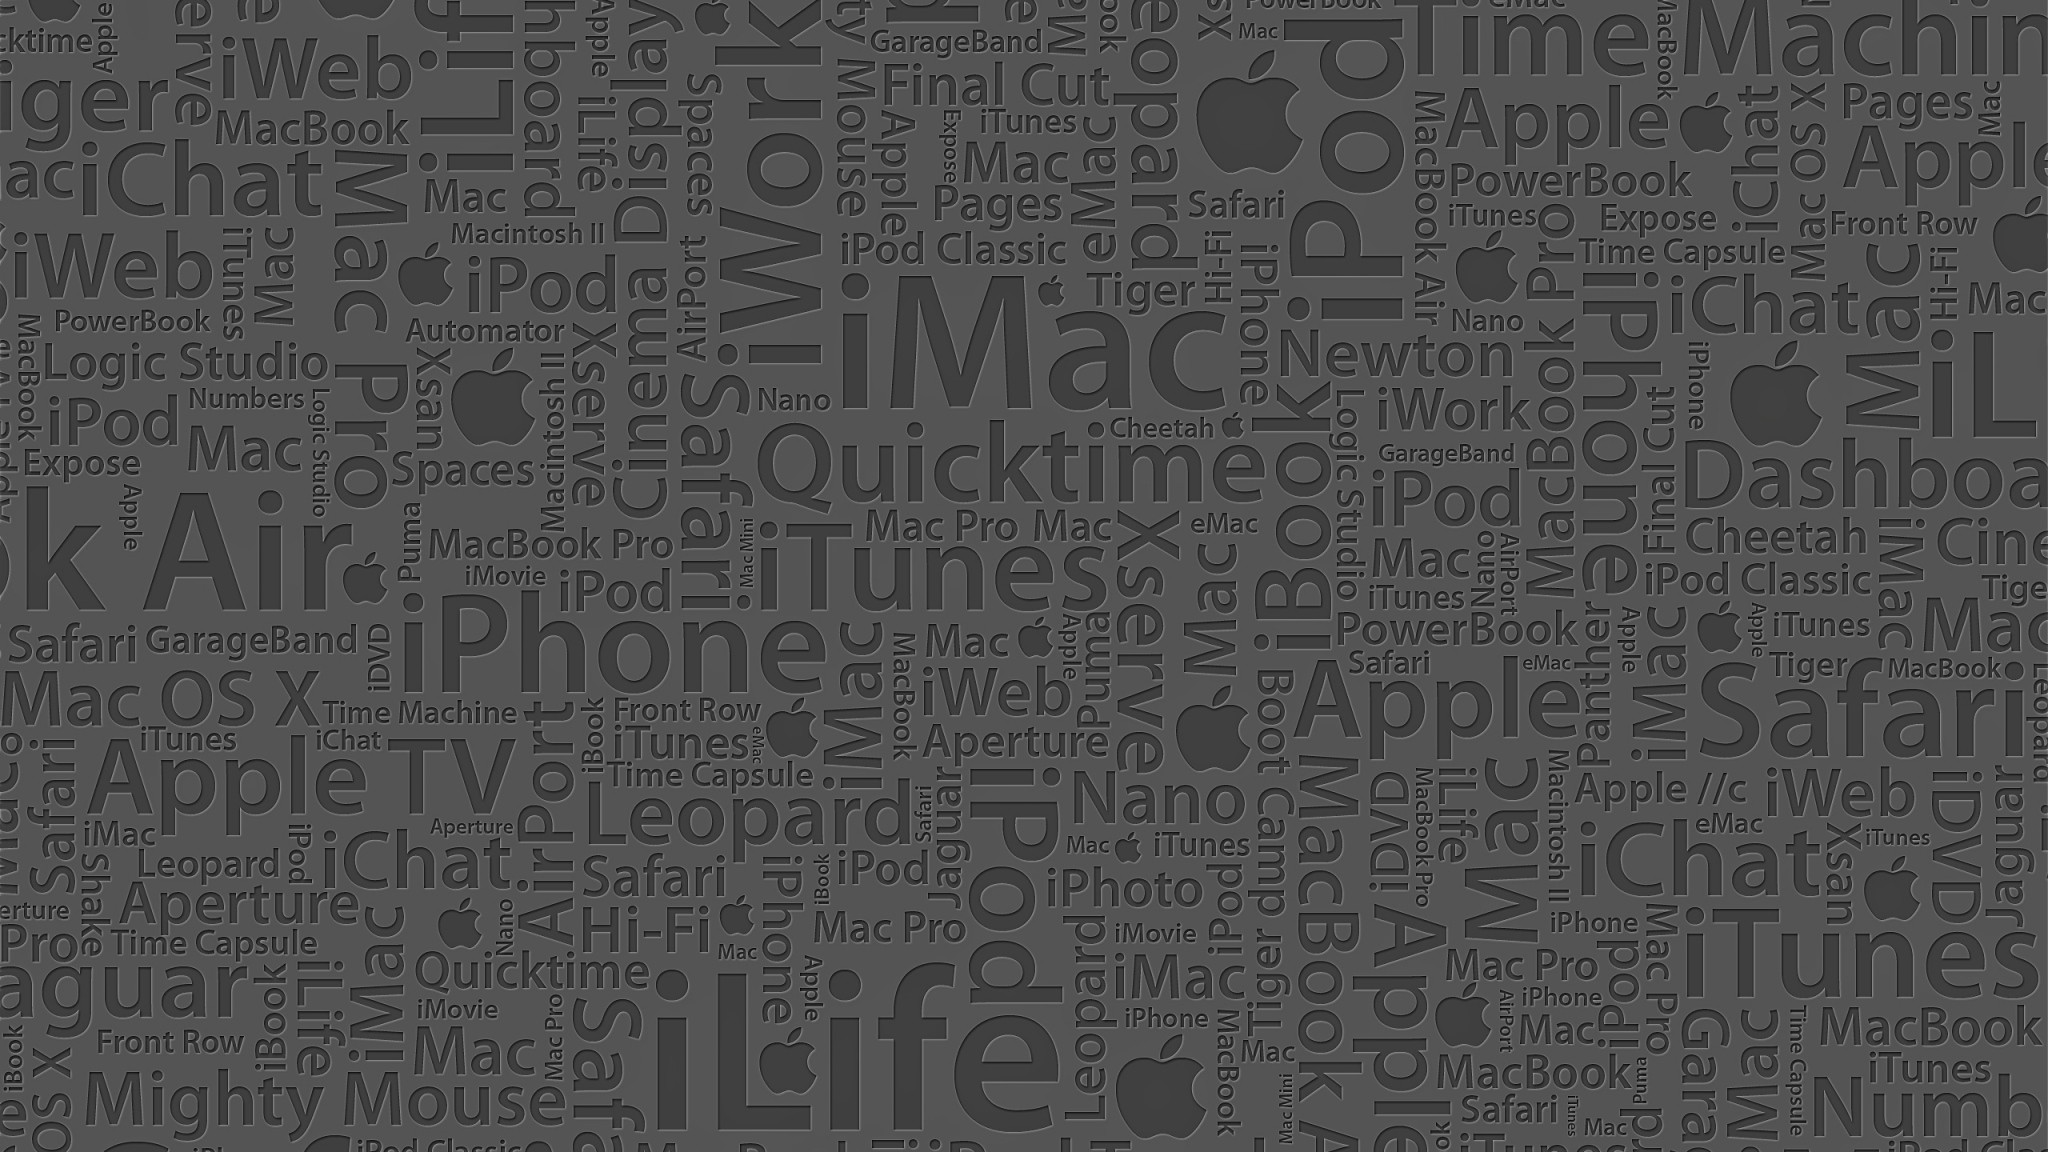 Wallpaper mac, ipod, apple, iwork, leopard